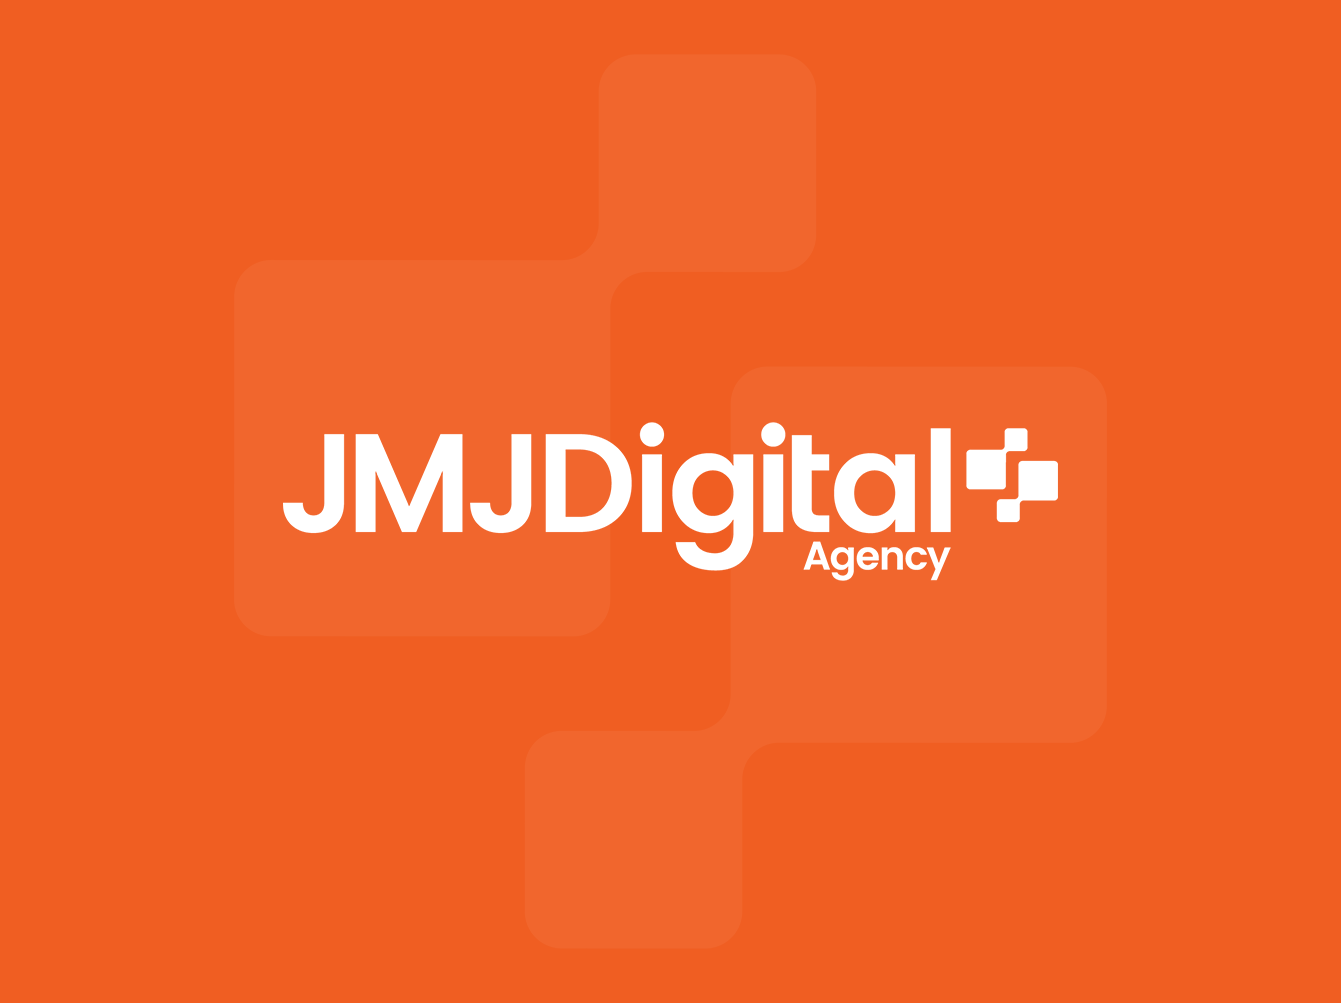 JMJ Digital Agency new brand